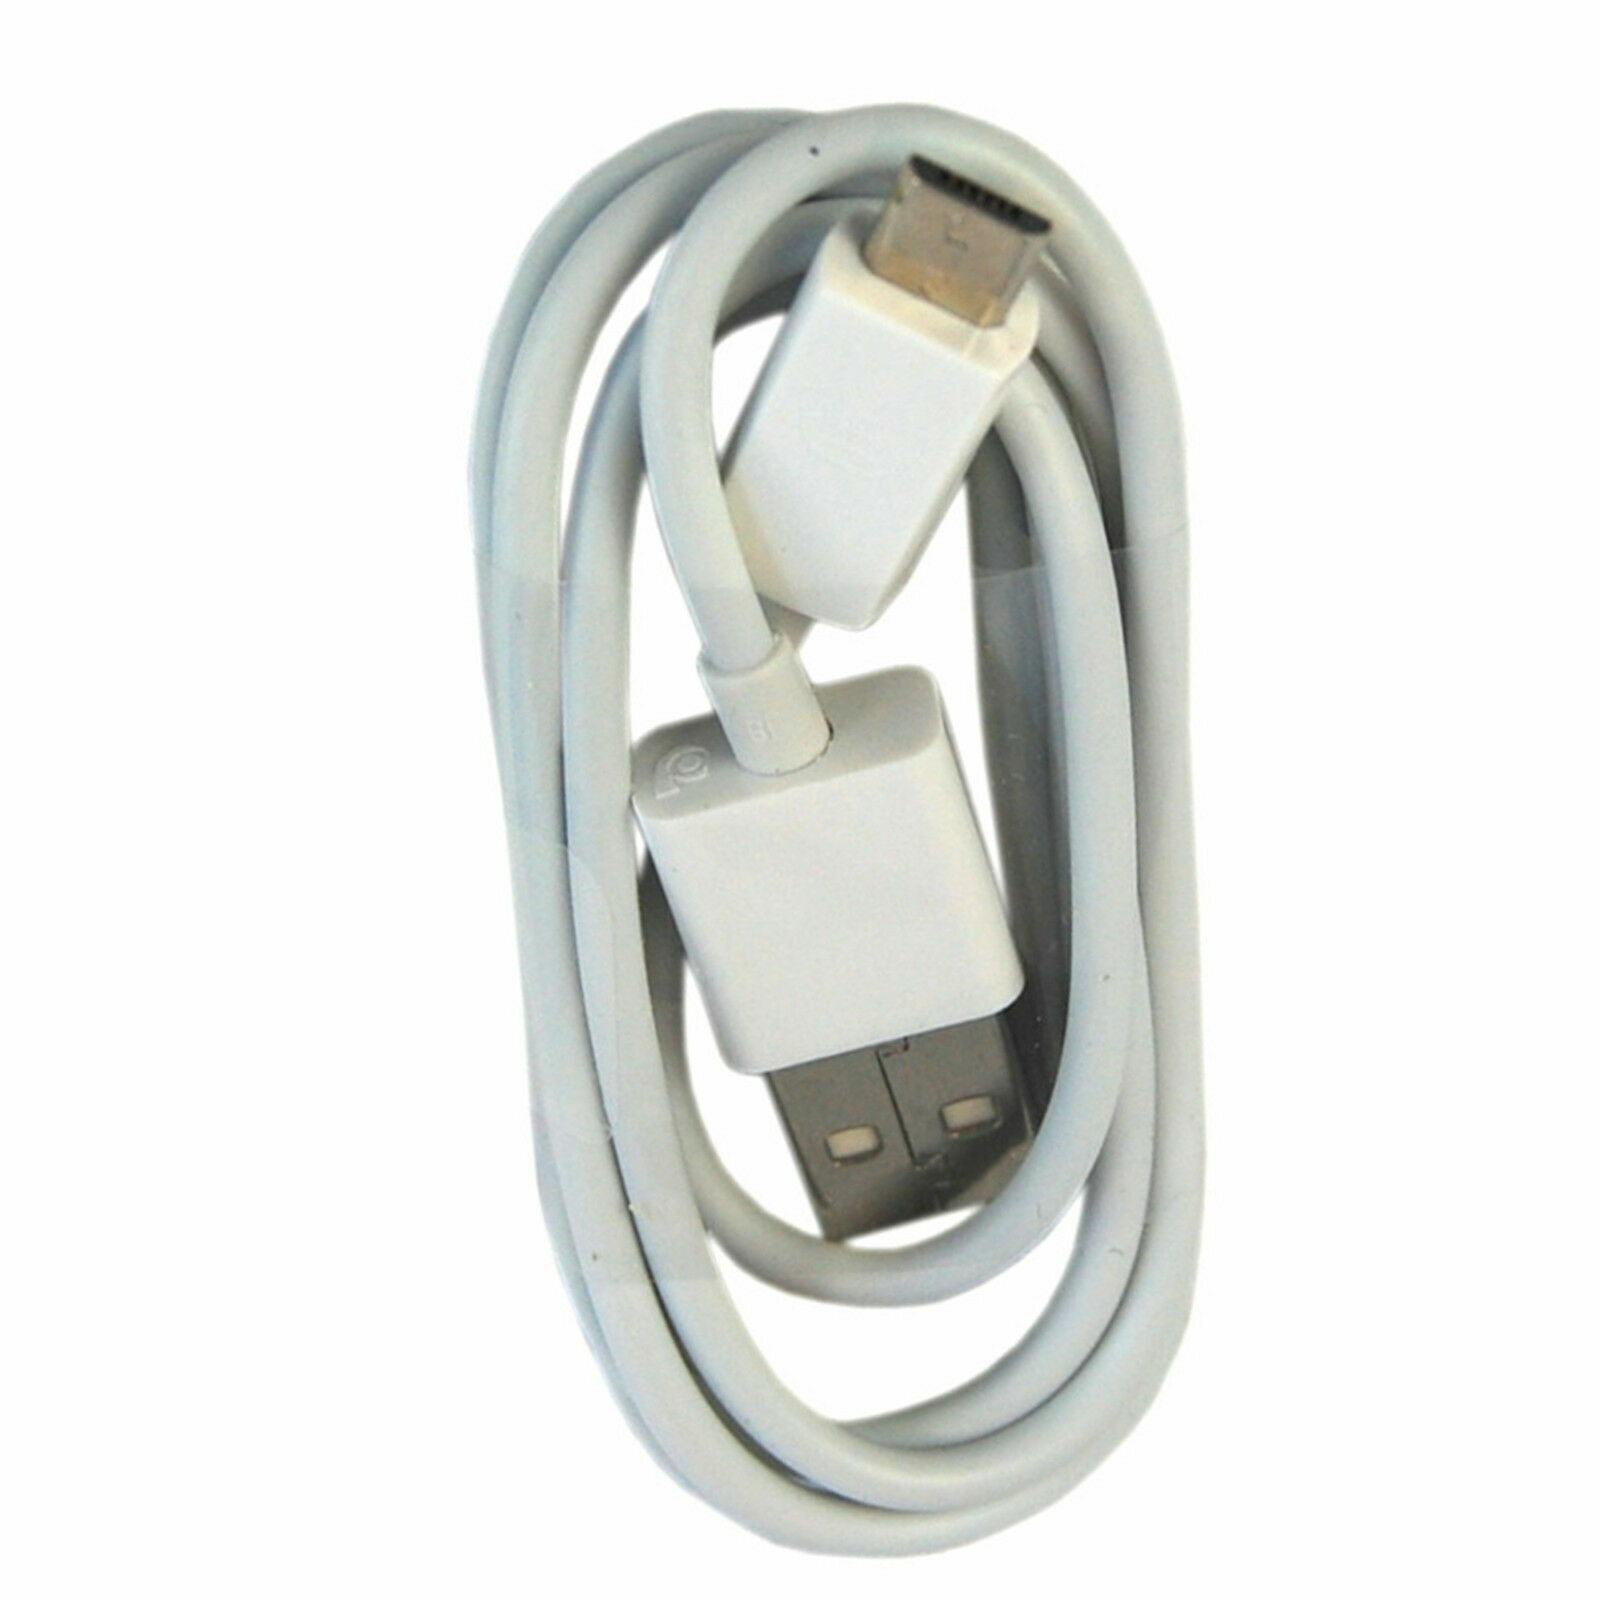 HQRP USB Charging Cable (White) for JBL Flip 4 / Charge 2+ / 3 / Clip 2 / Pulse 3 / Xtreme / GO / T450BT / E45BT / E55BT / Everest 300 / 700 / Elite 750NC - image 1 of 3